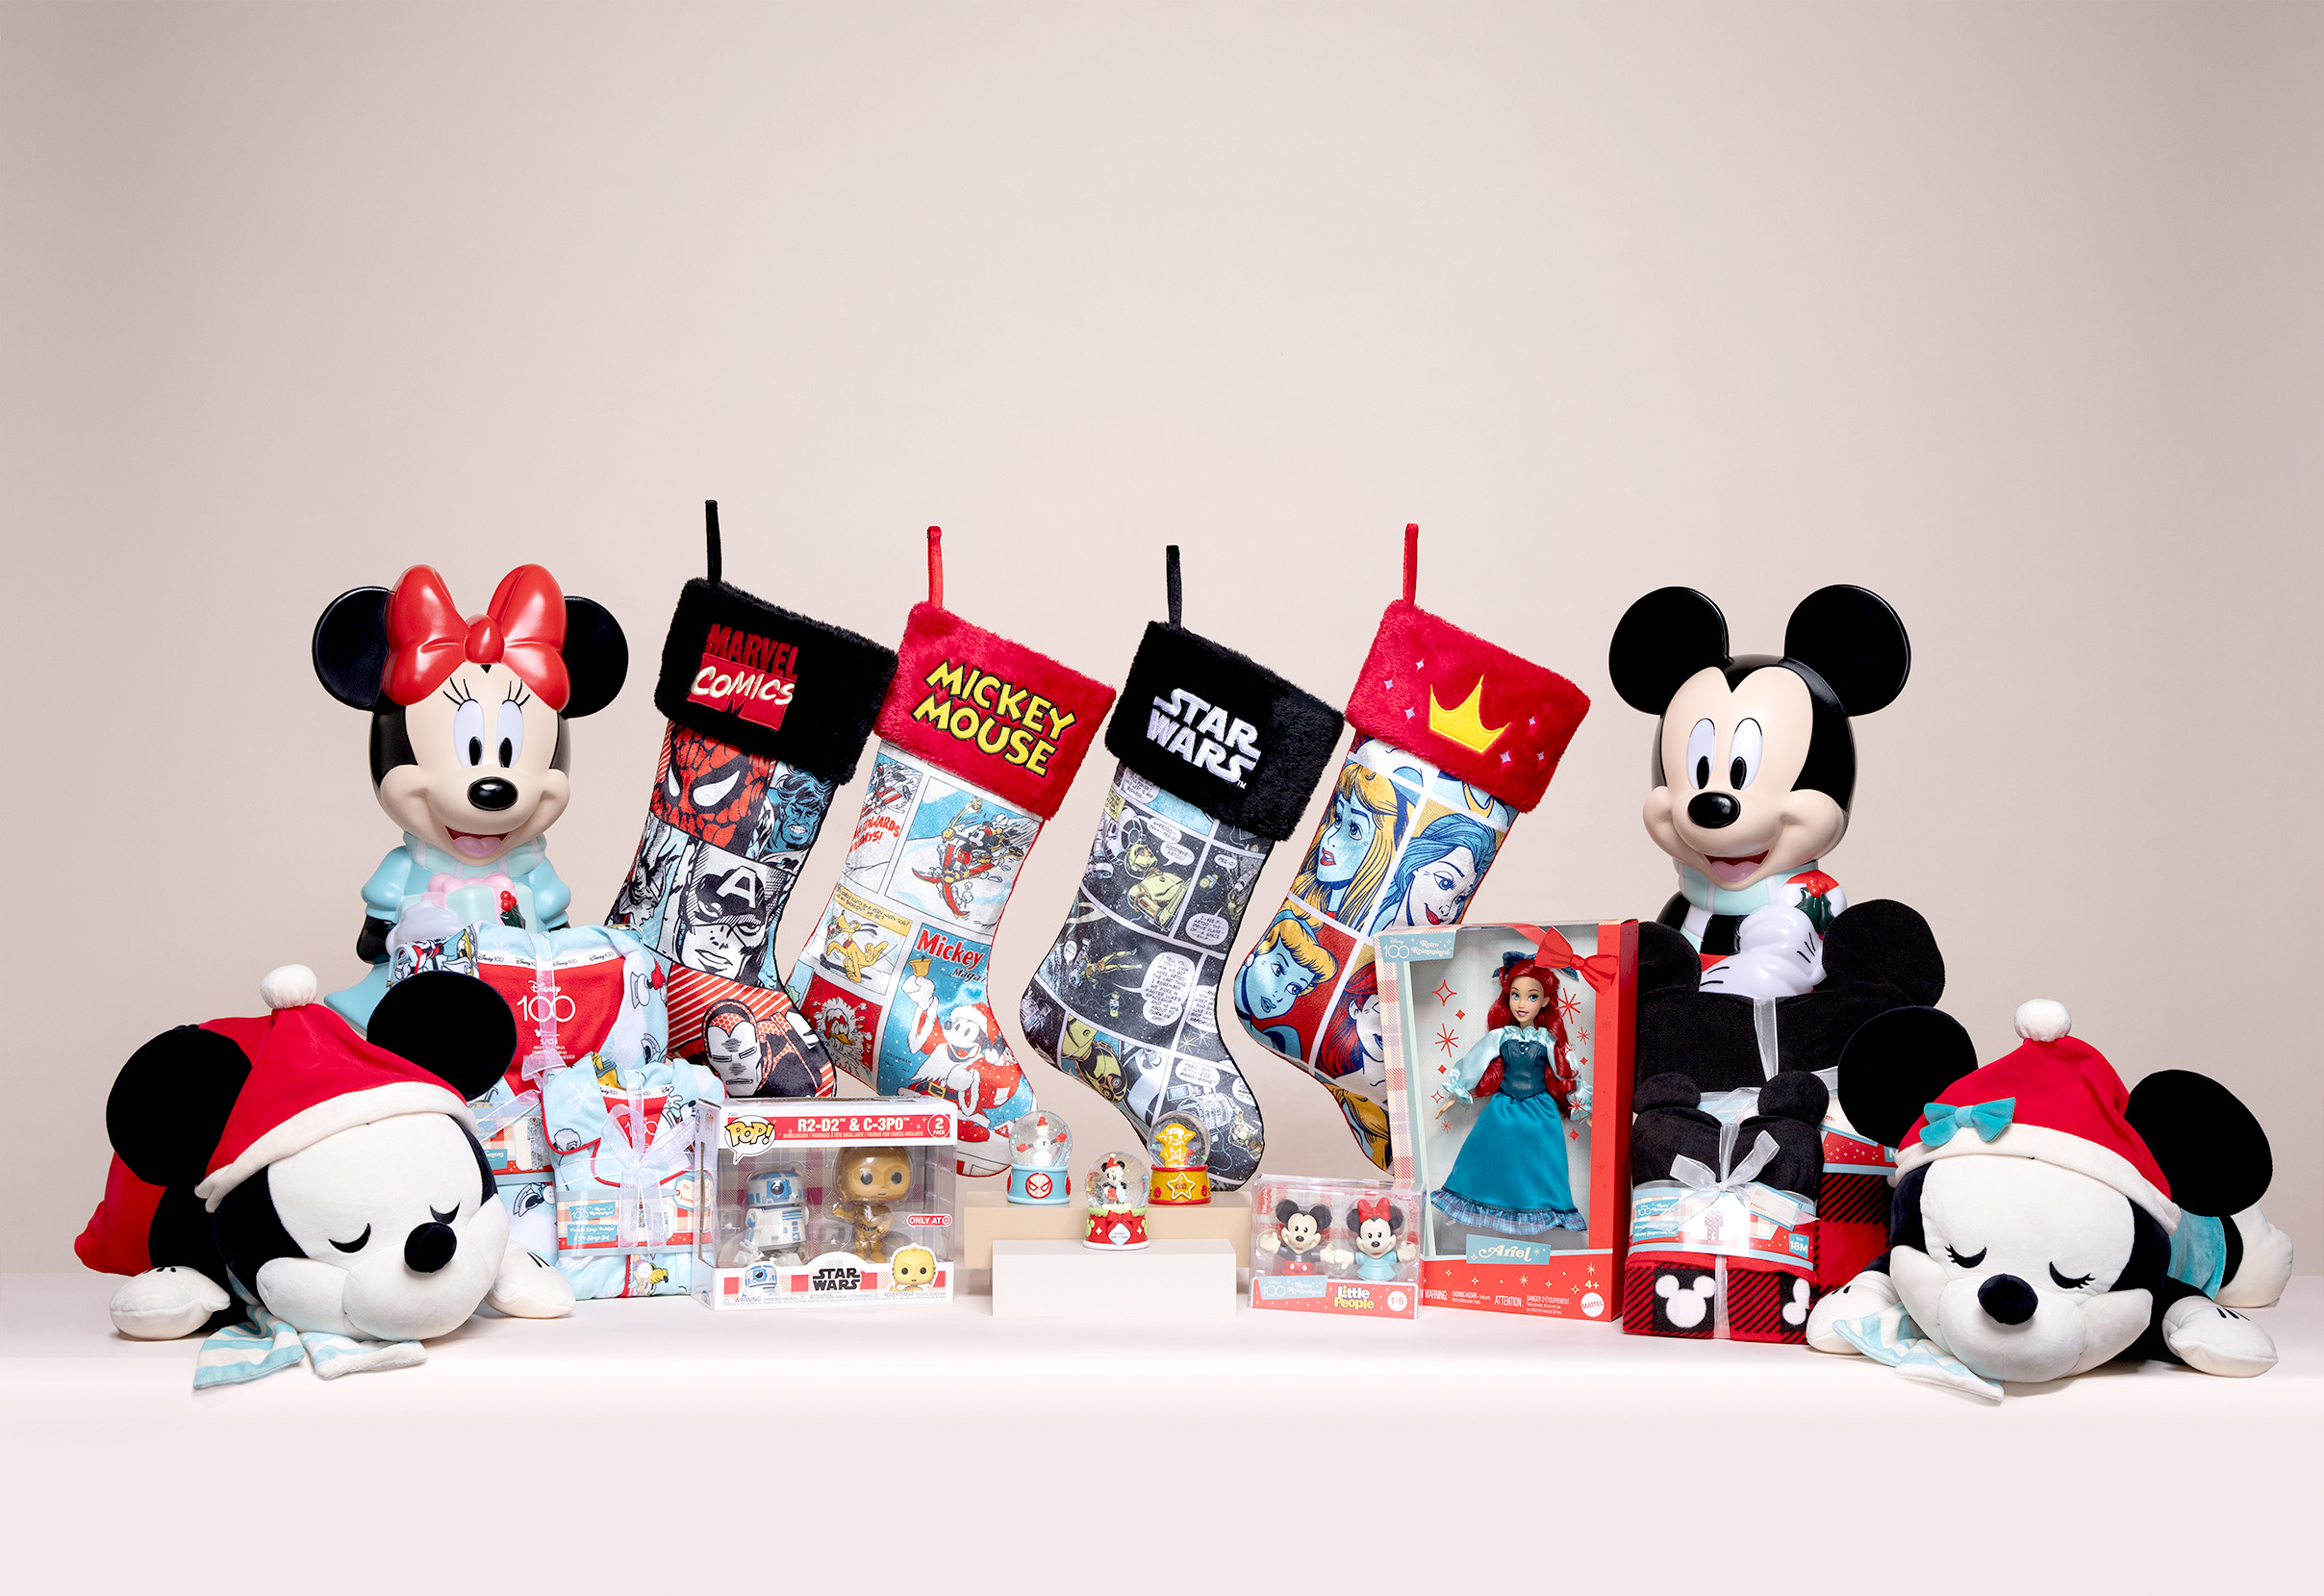 Disney Junior T.o.t.s Action Figure - Disney Store : Target